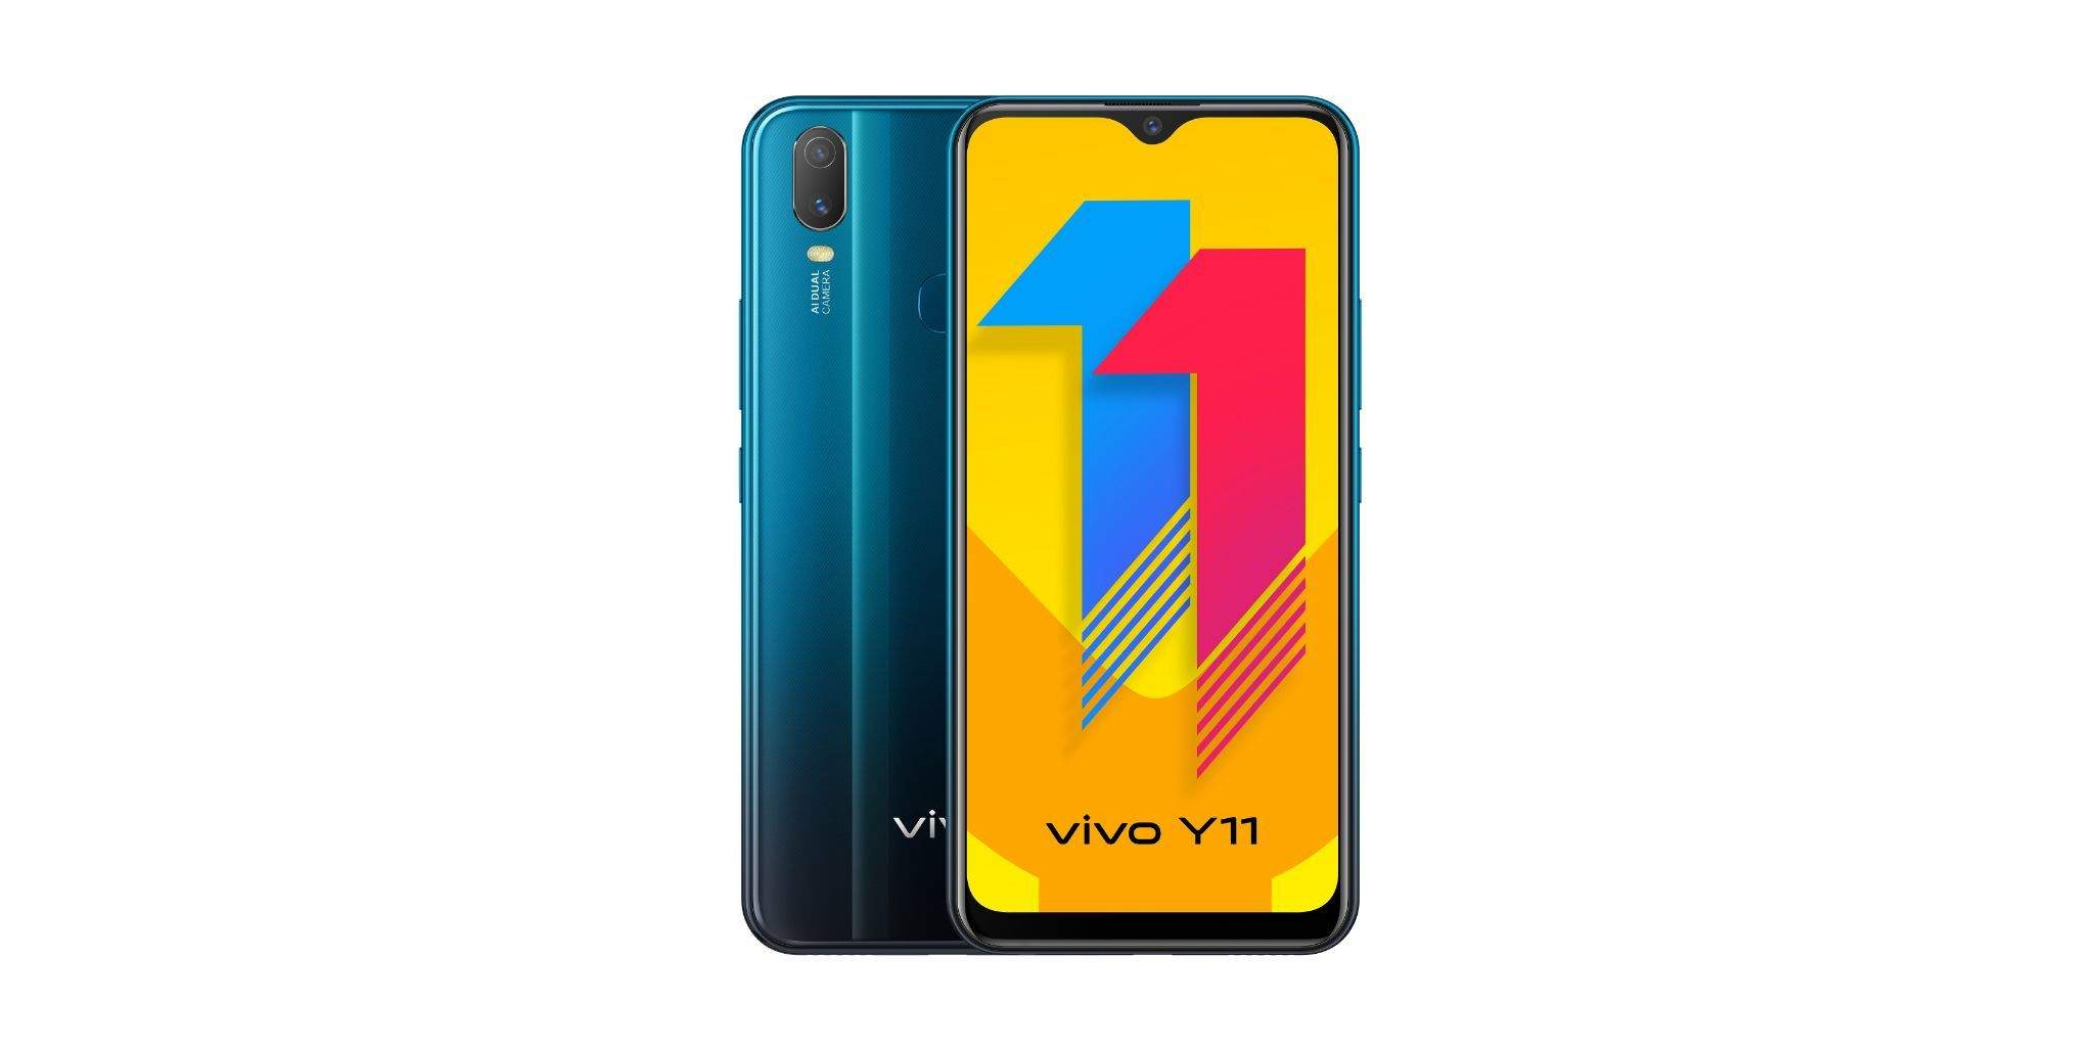 Price drop - Get your Vivo Y50 or Vivo S1 Pro for Rs.1,000 less | TechRadar